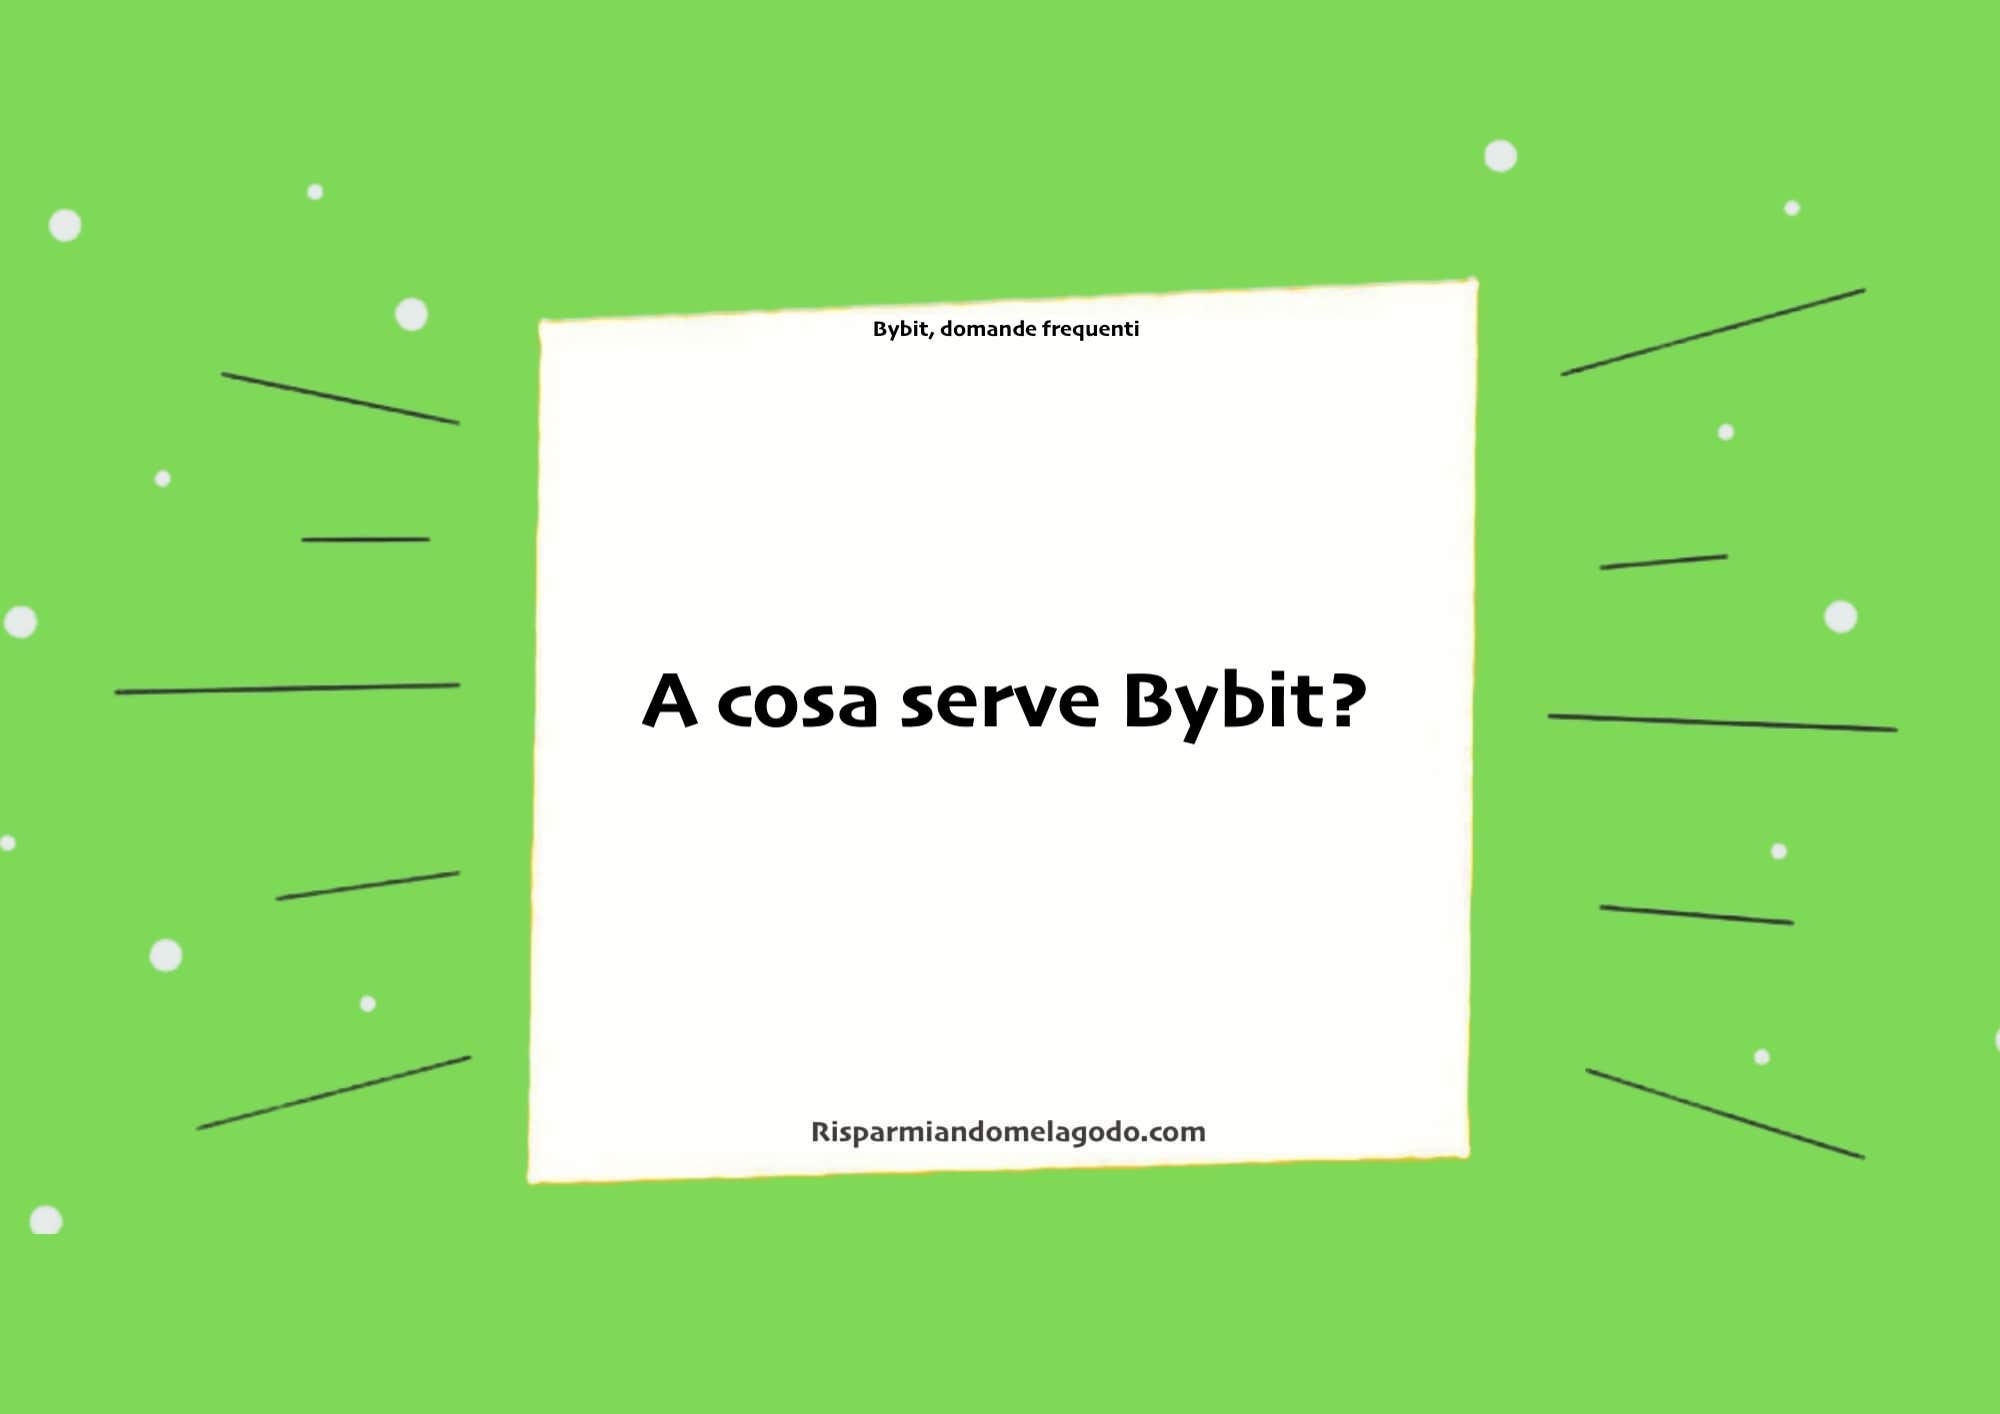 A cosa serve Bybit?